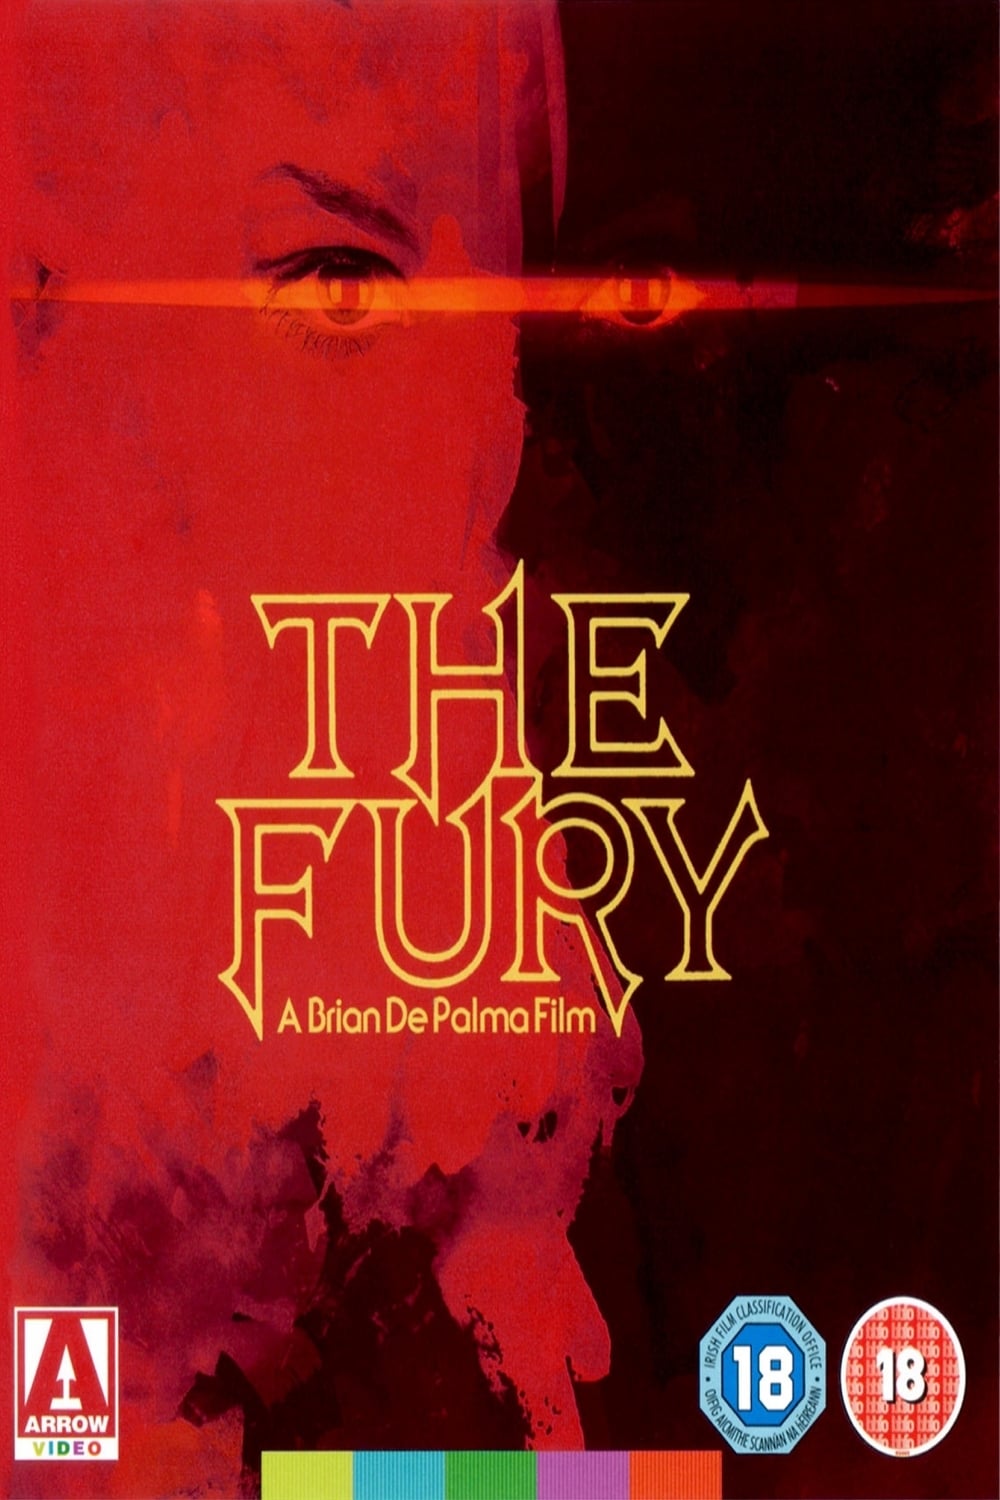 Blood on the Lens: Richard H. Kline on Brian De Palma's 'The Fury'